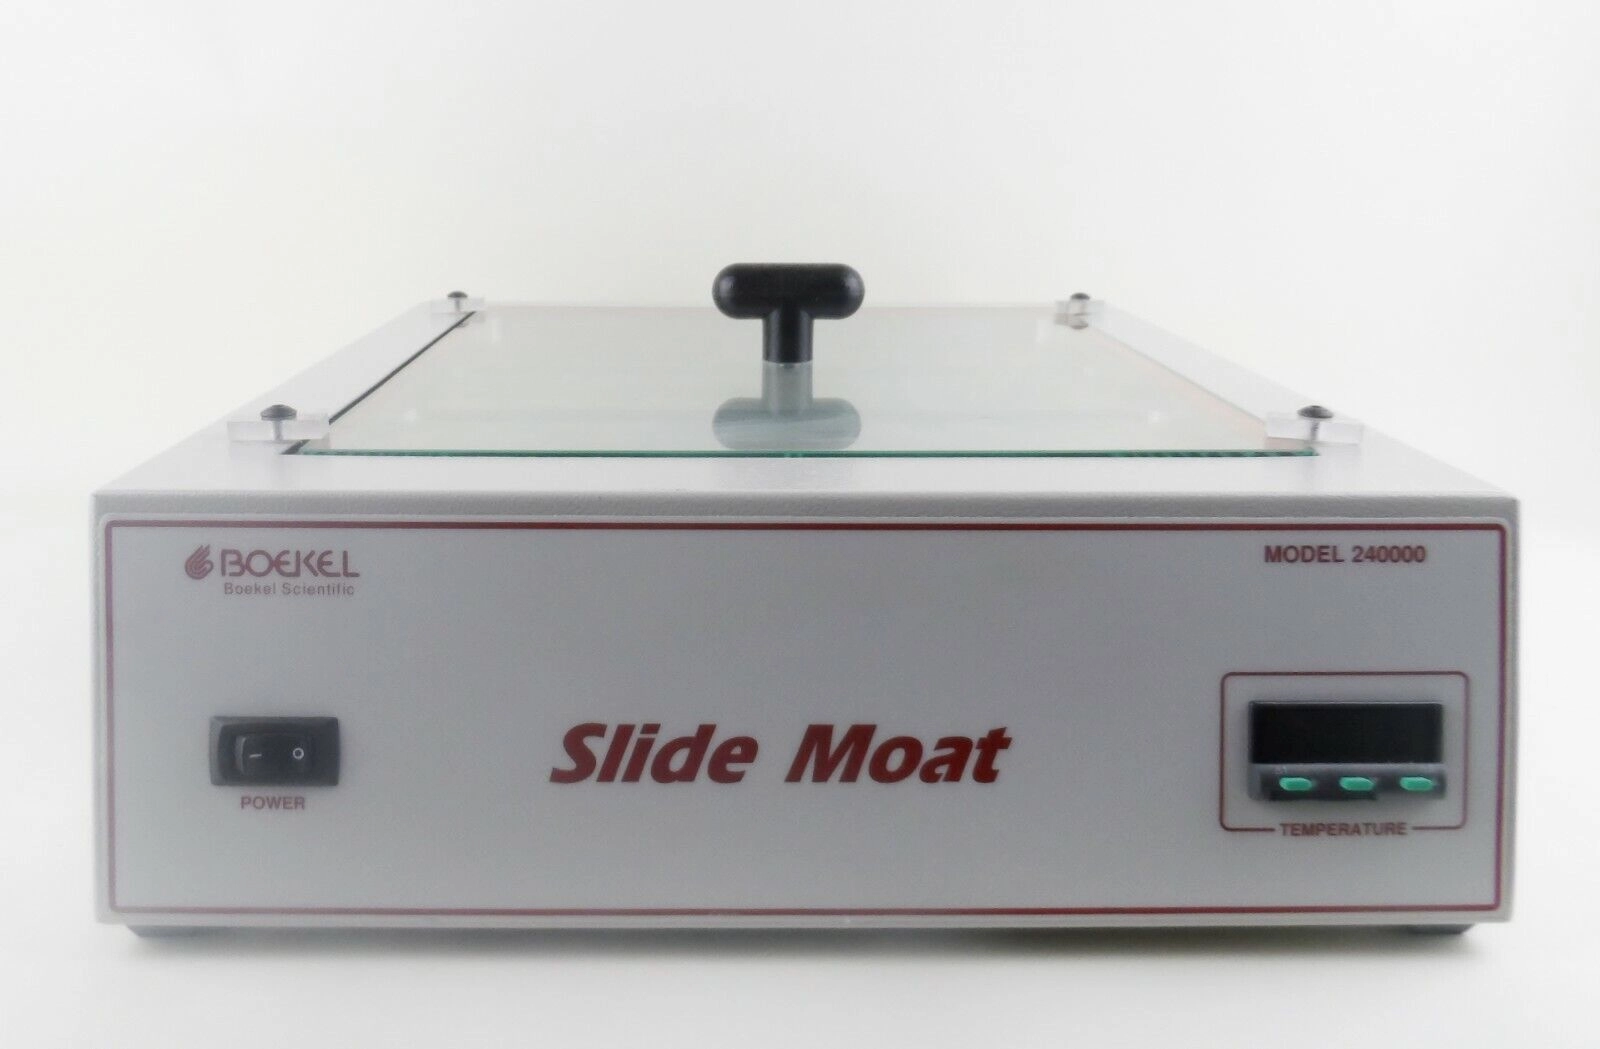 Boekel Slide Moat Hybridization Bath 24000